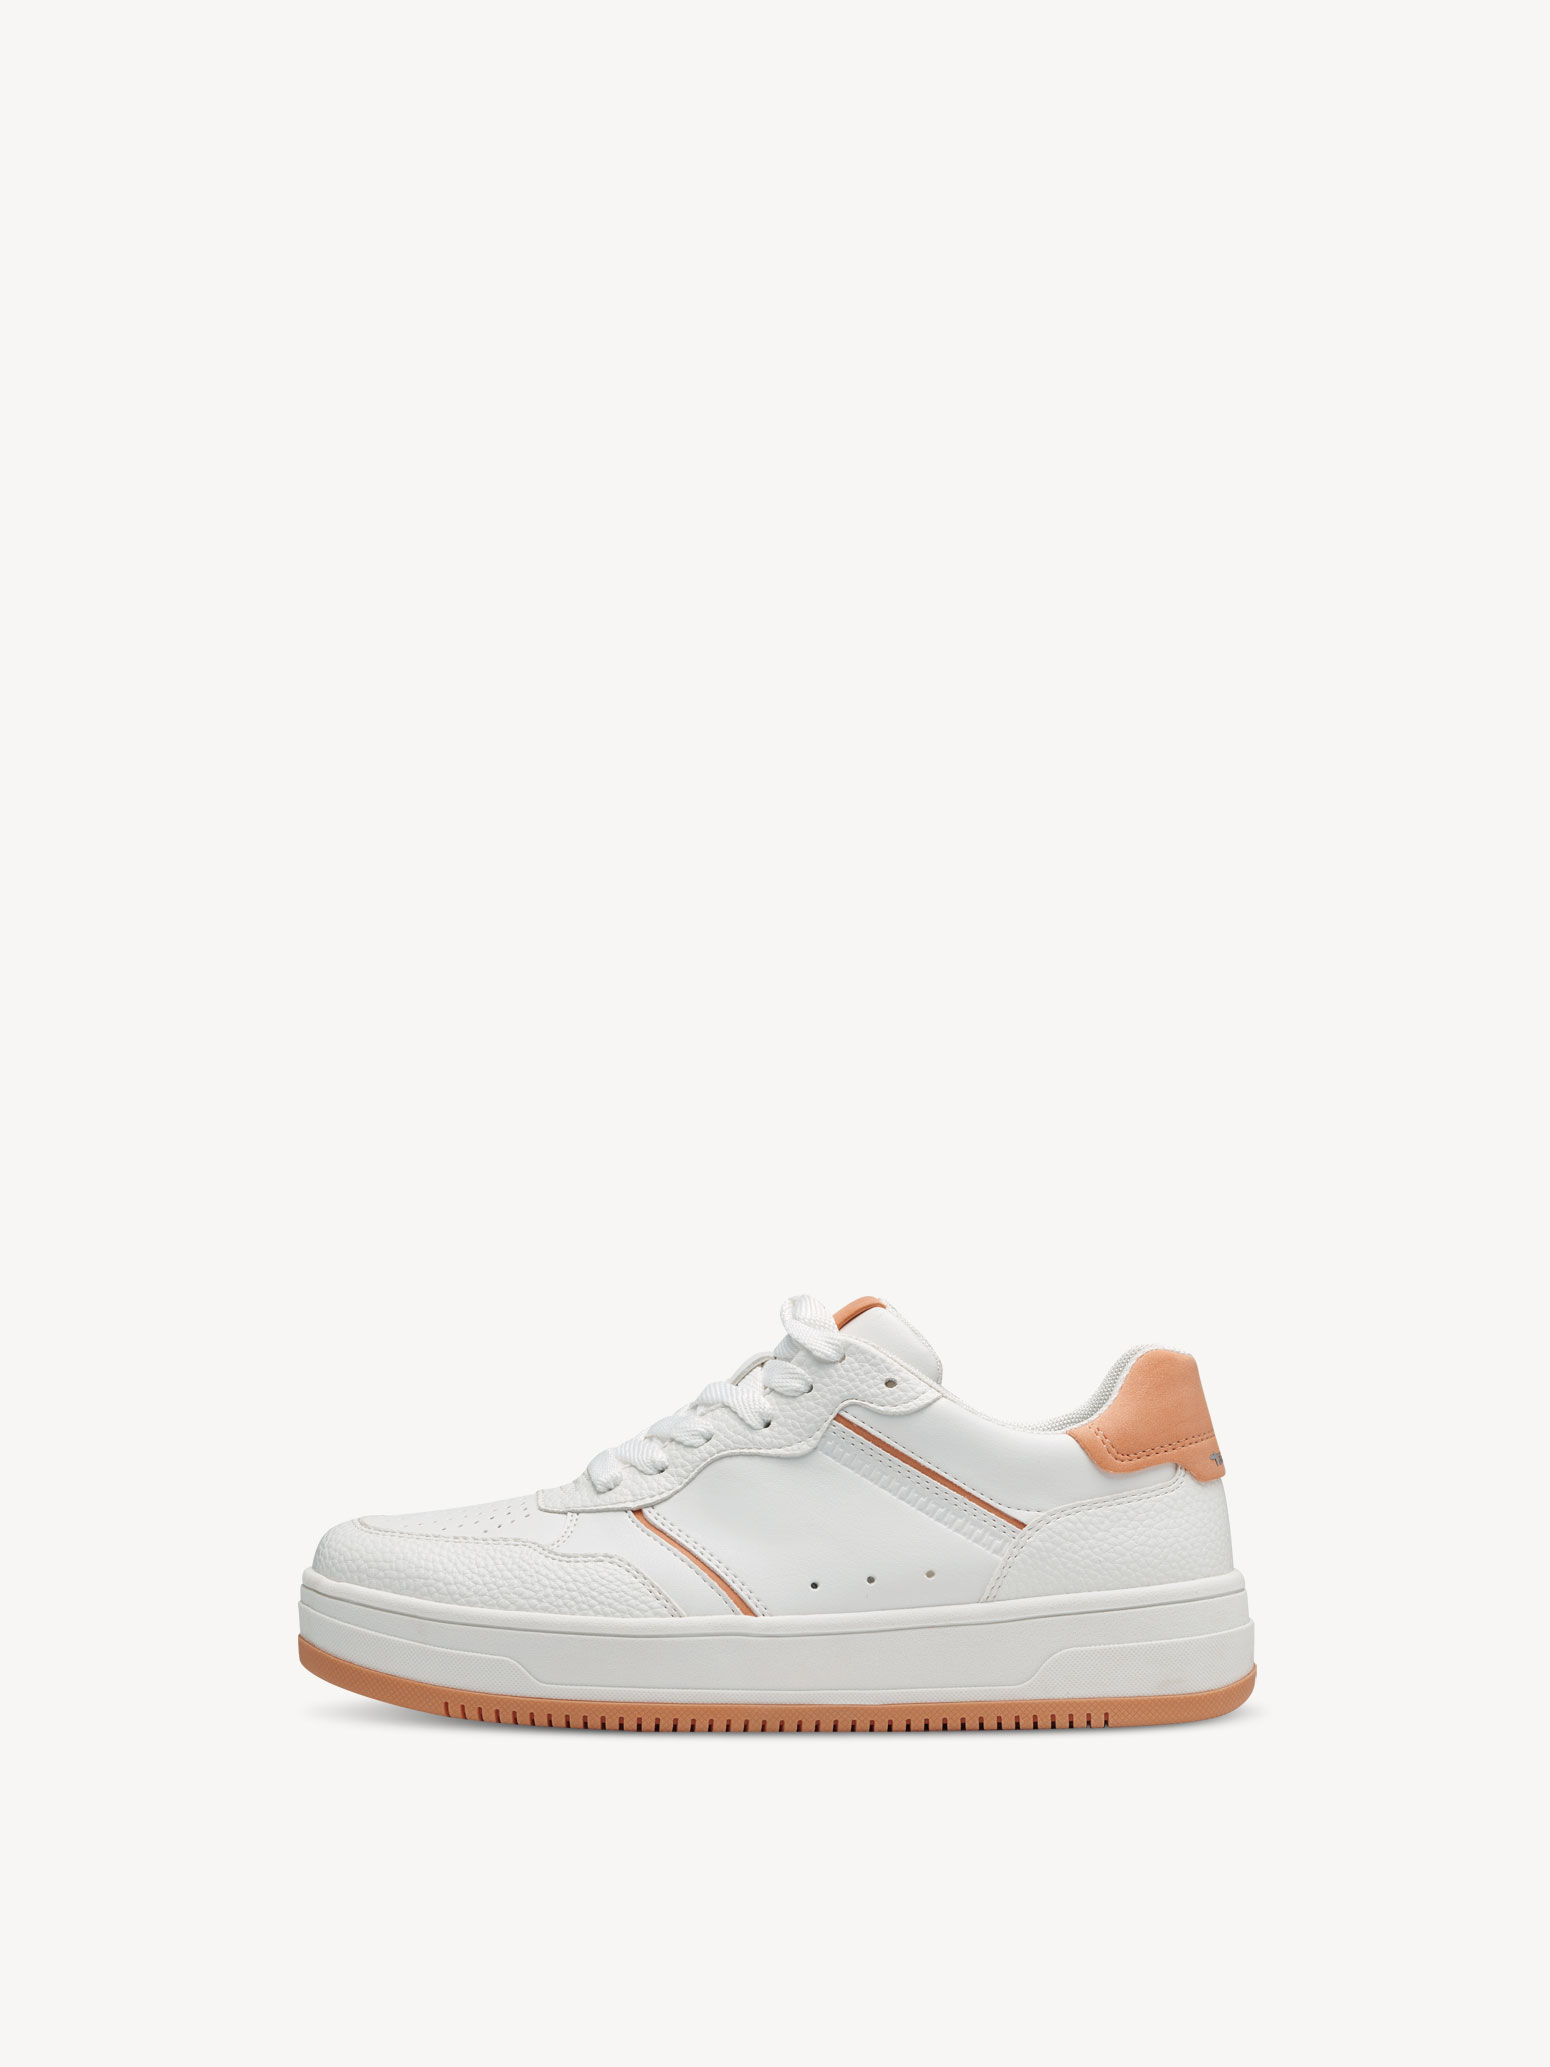 Sneaker - orange